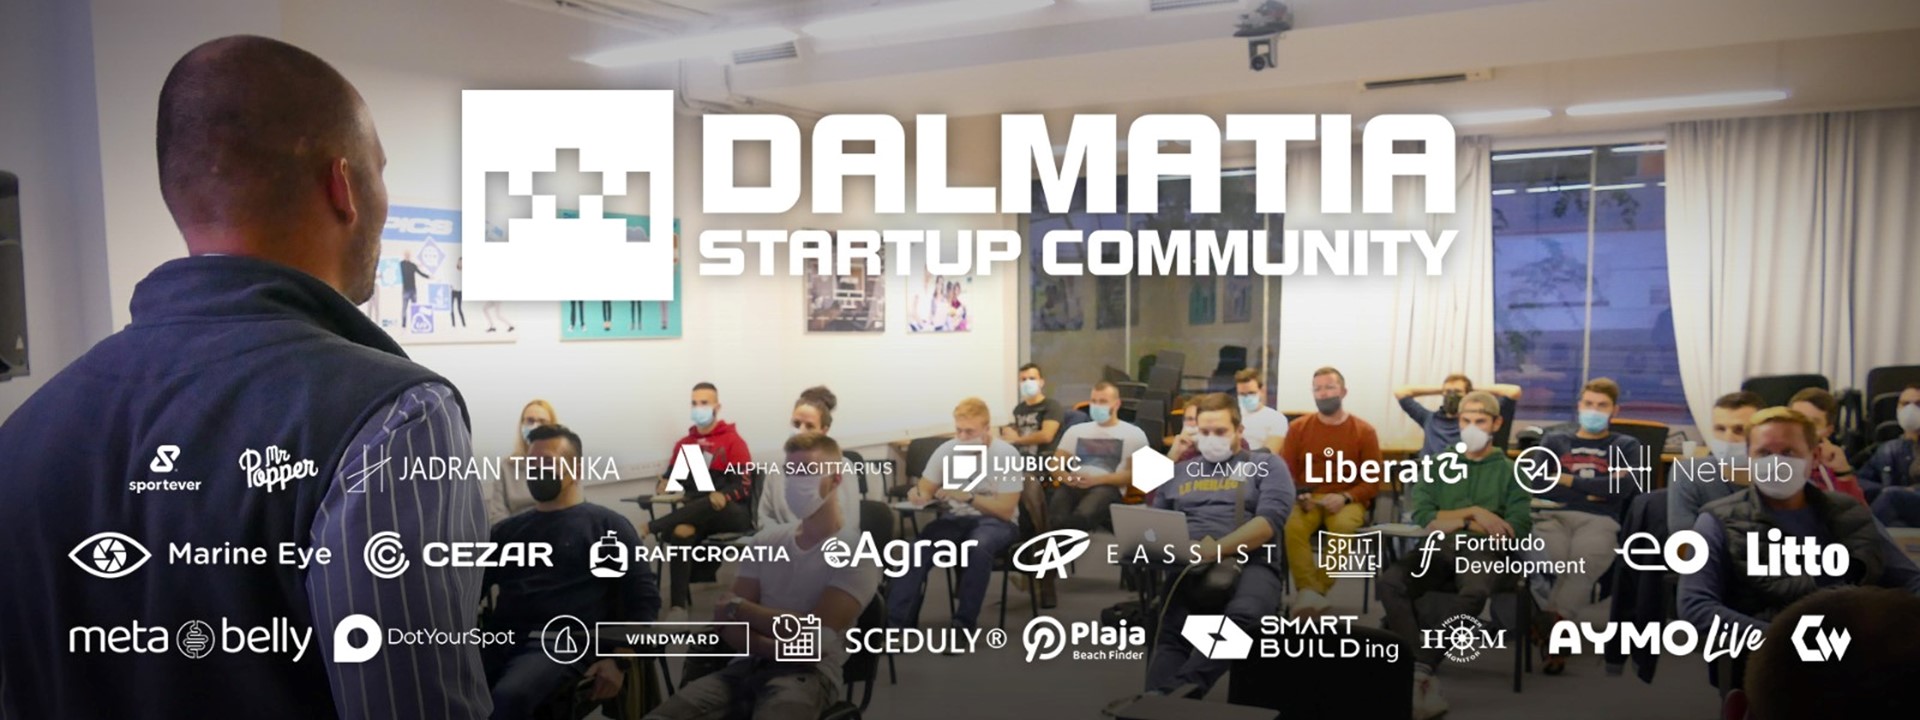 Dalmatia Startup Community